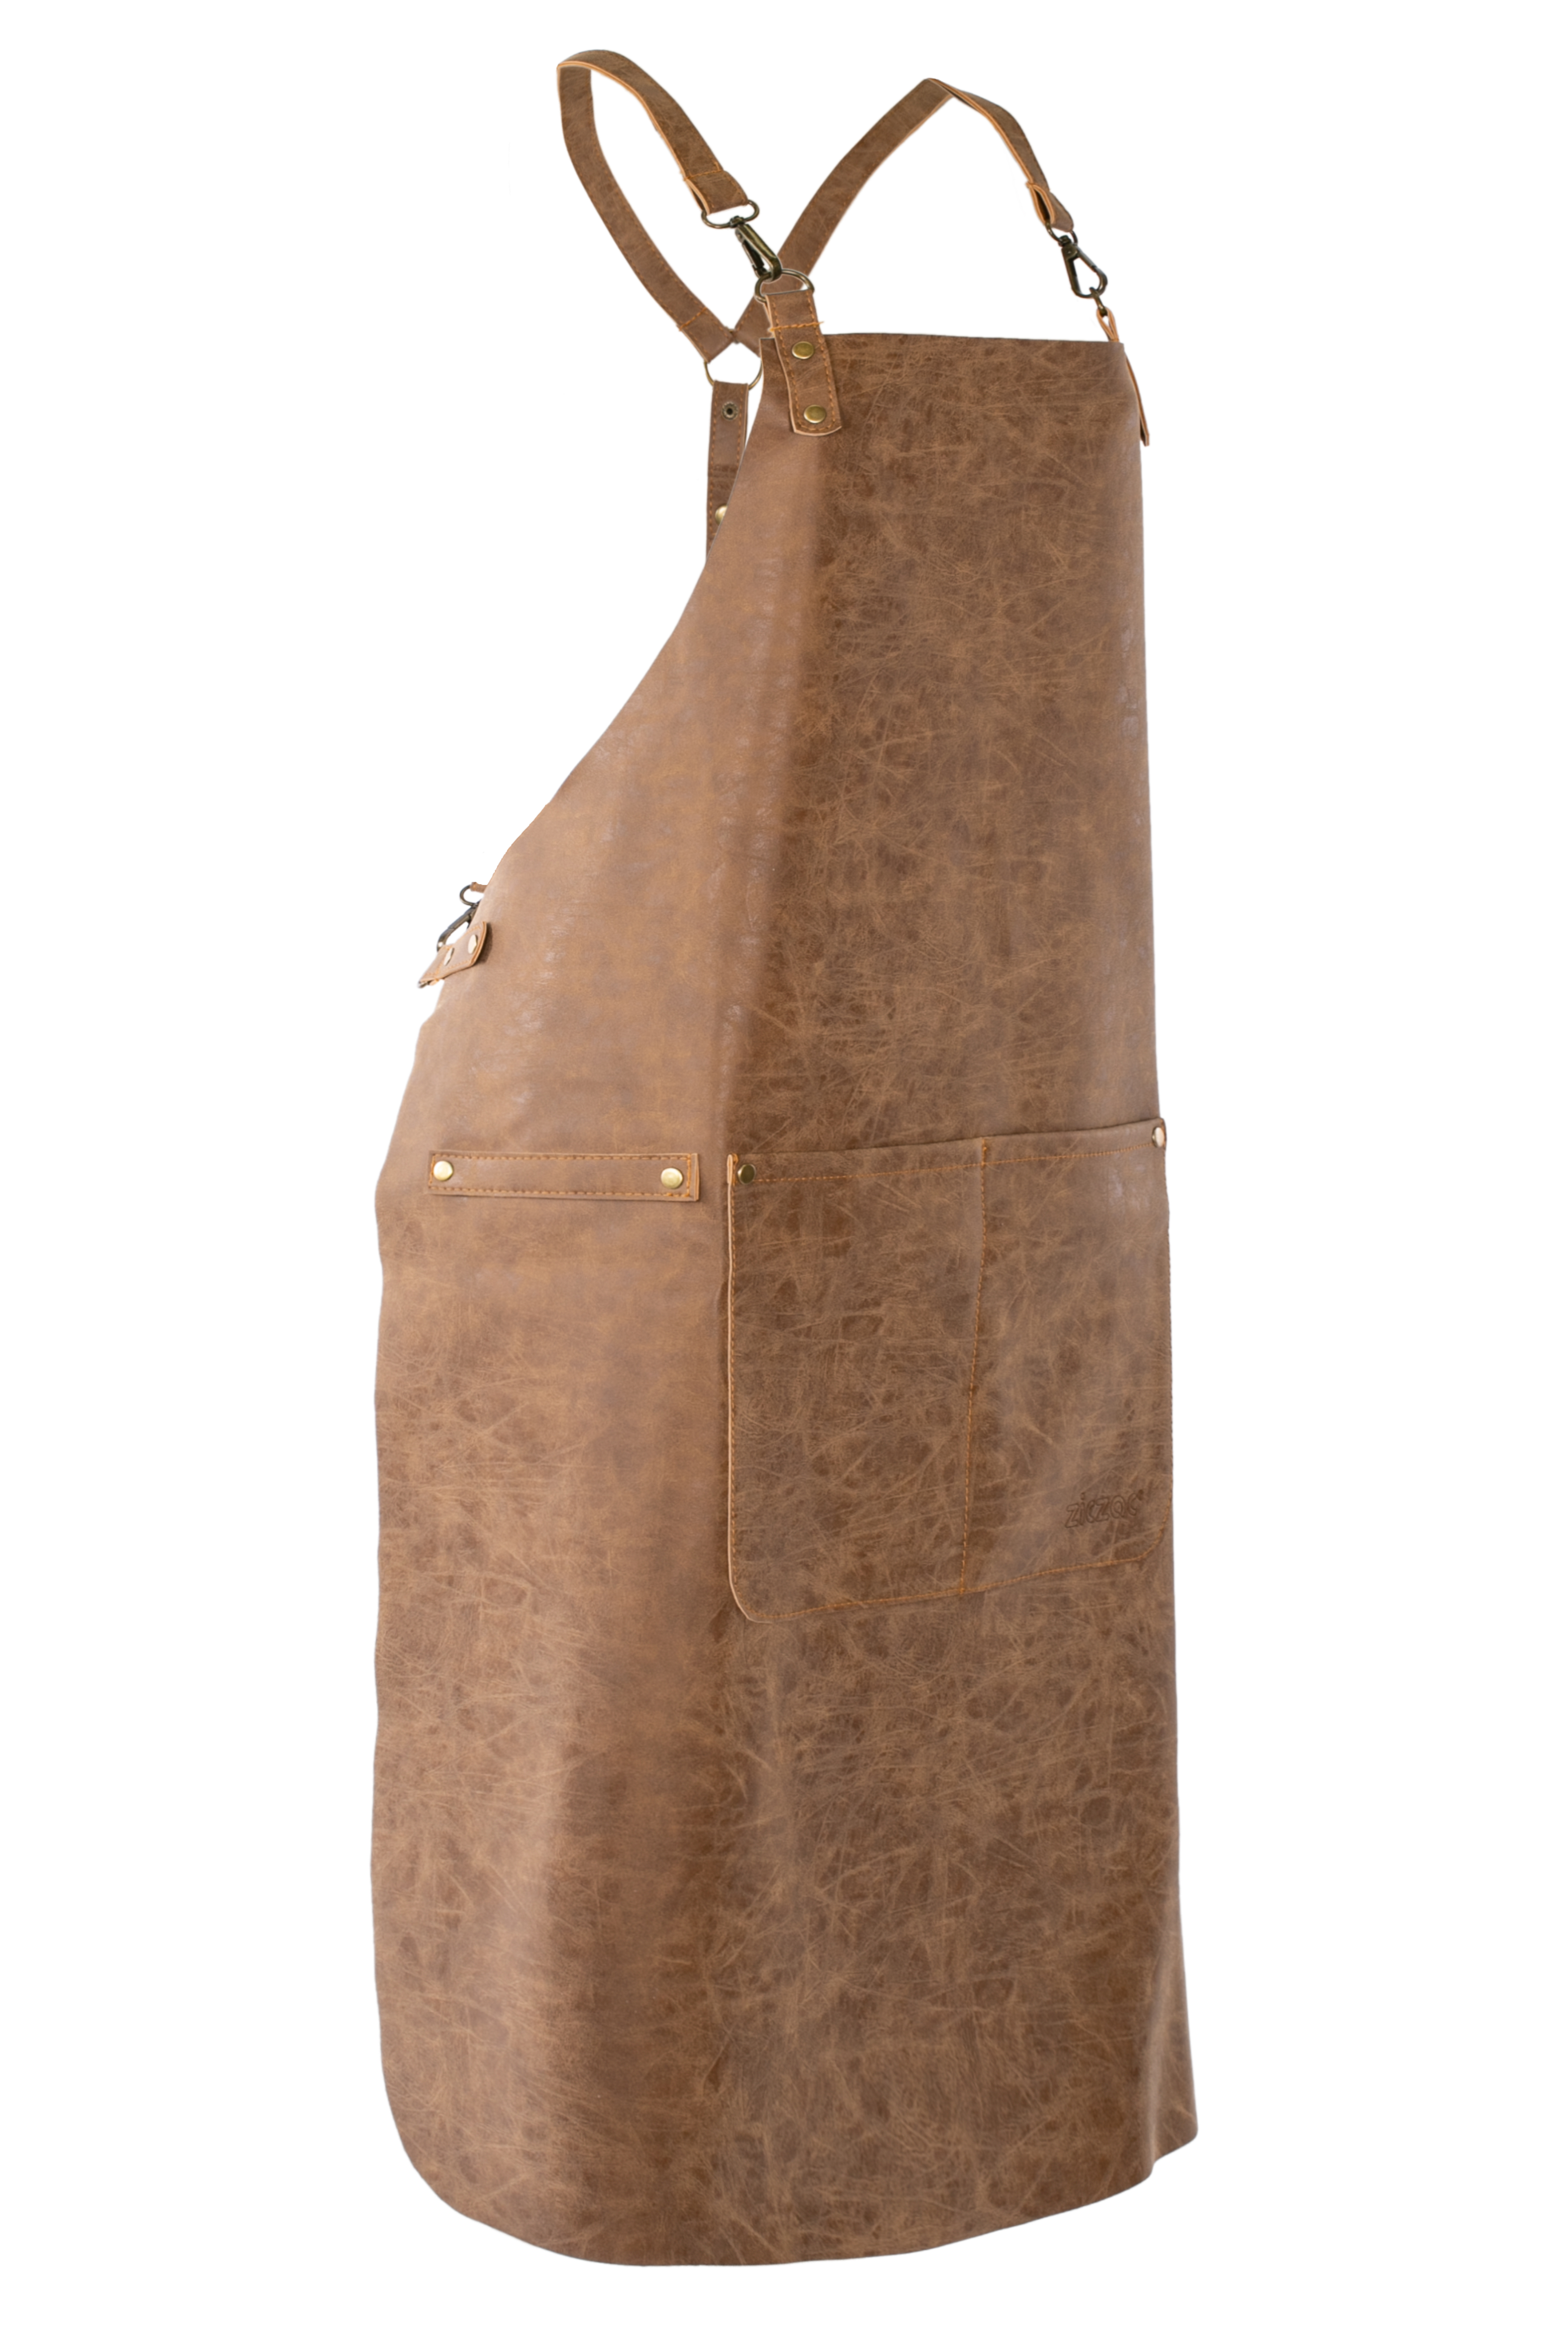 Tablier TRUMAN (Sling Back Barber Style), 64x85 cm, walnut